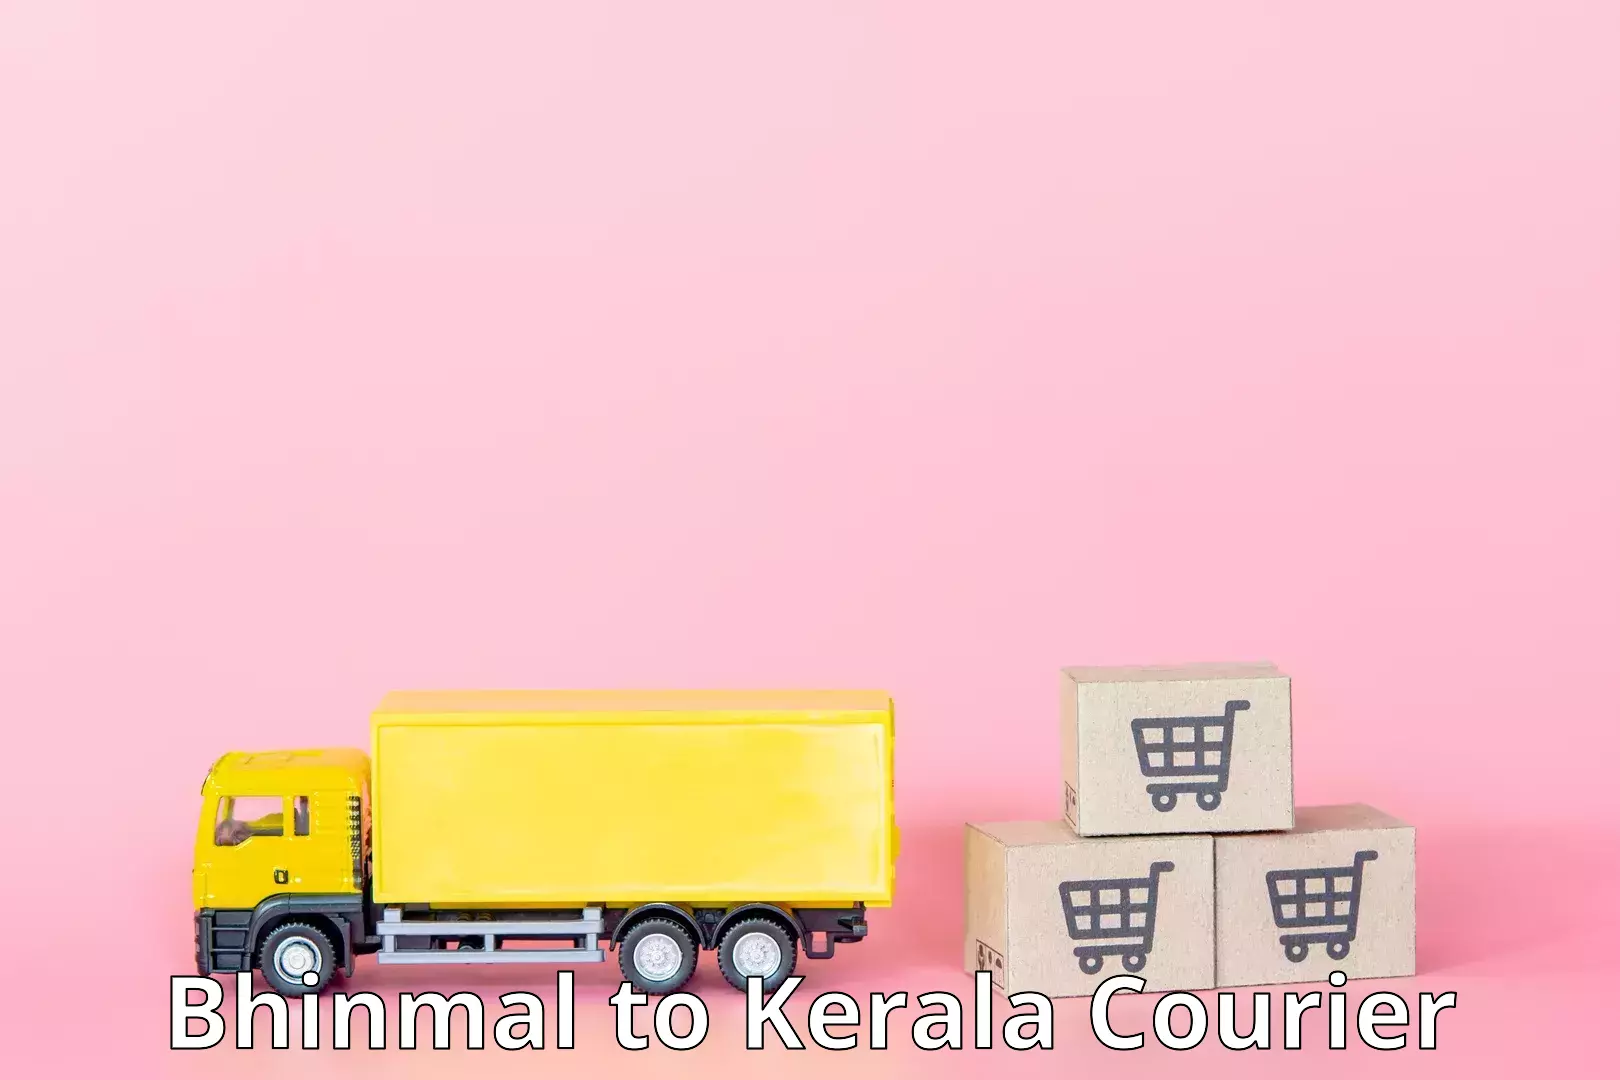 International parcel service Bhinmal to Kochi